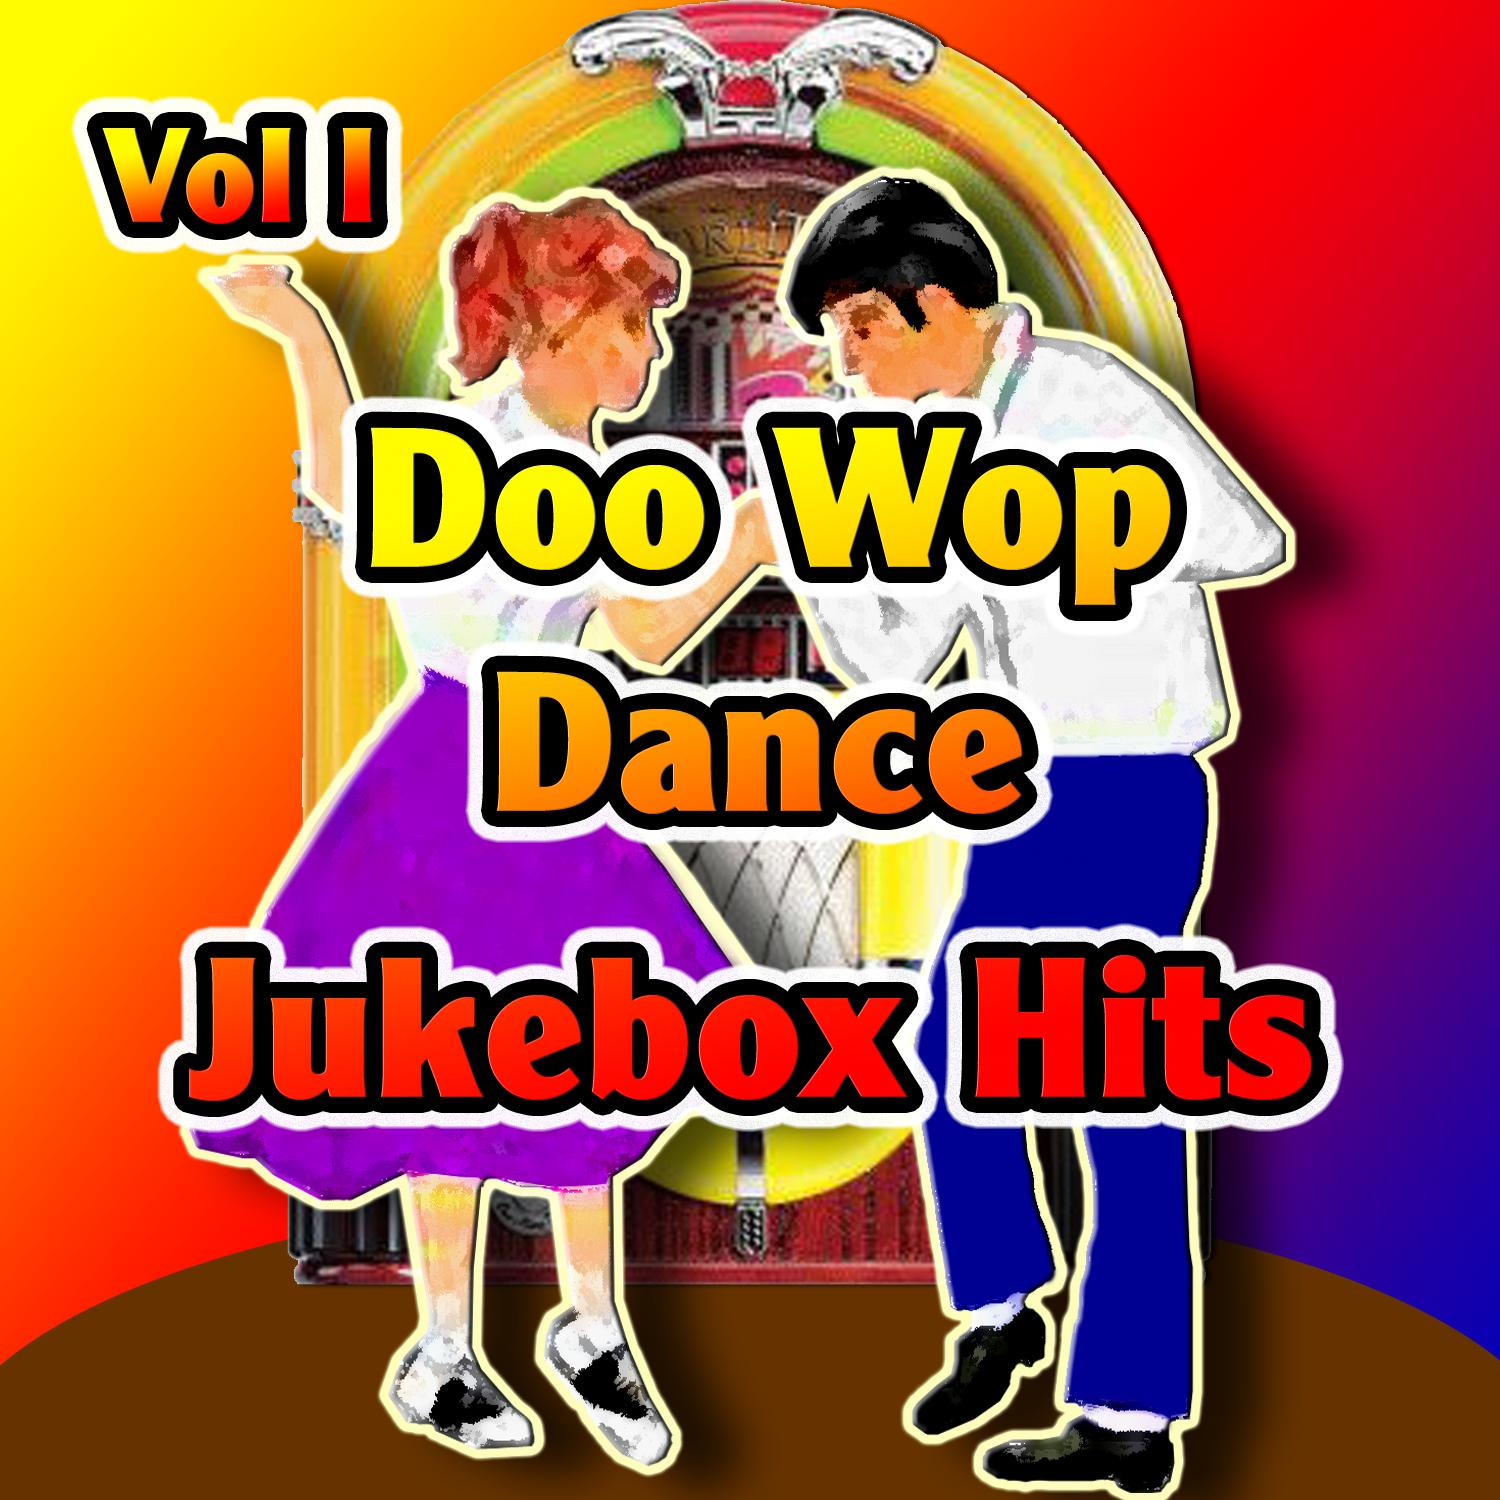 Doo Wop Dance Jukebox Hits Vol 1